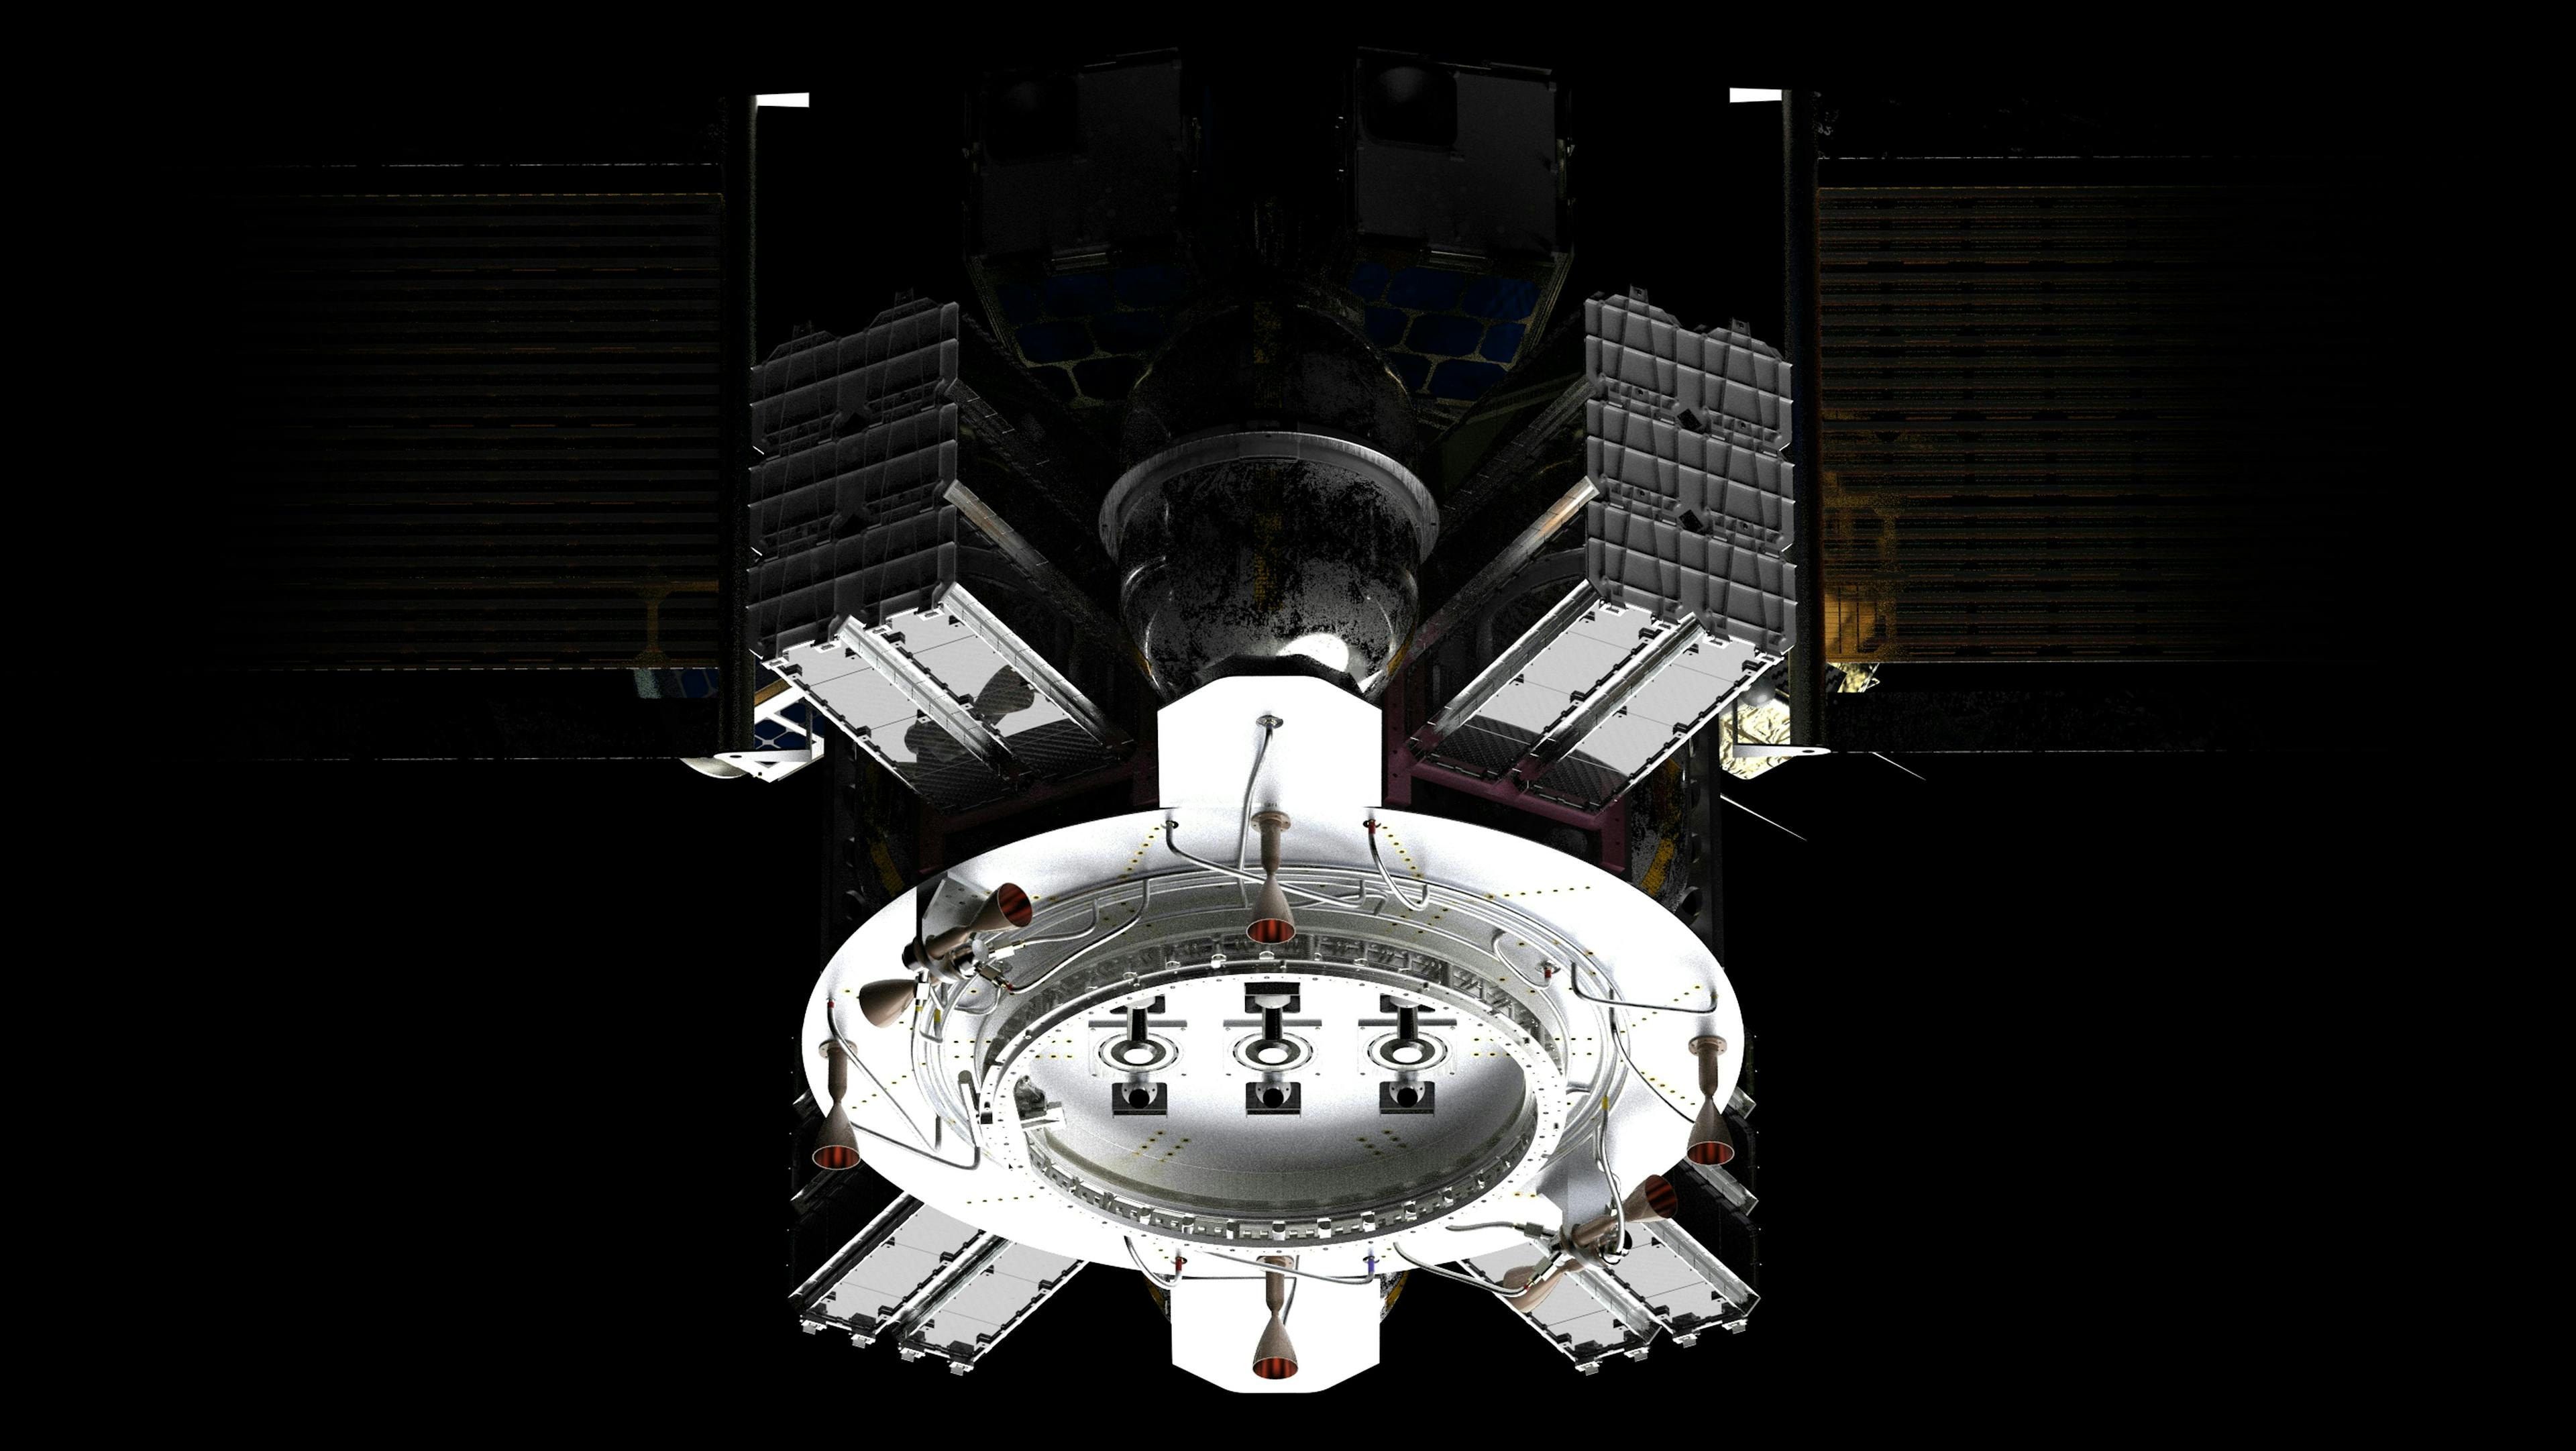 Multi-role Orbital Servicing Vehicle to drive economies of scale across orbital servicing.